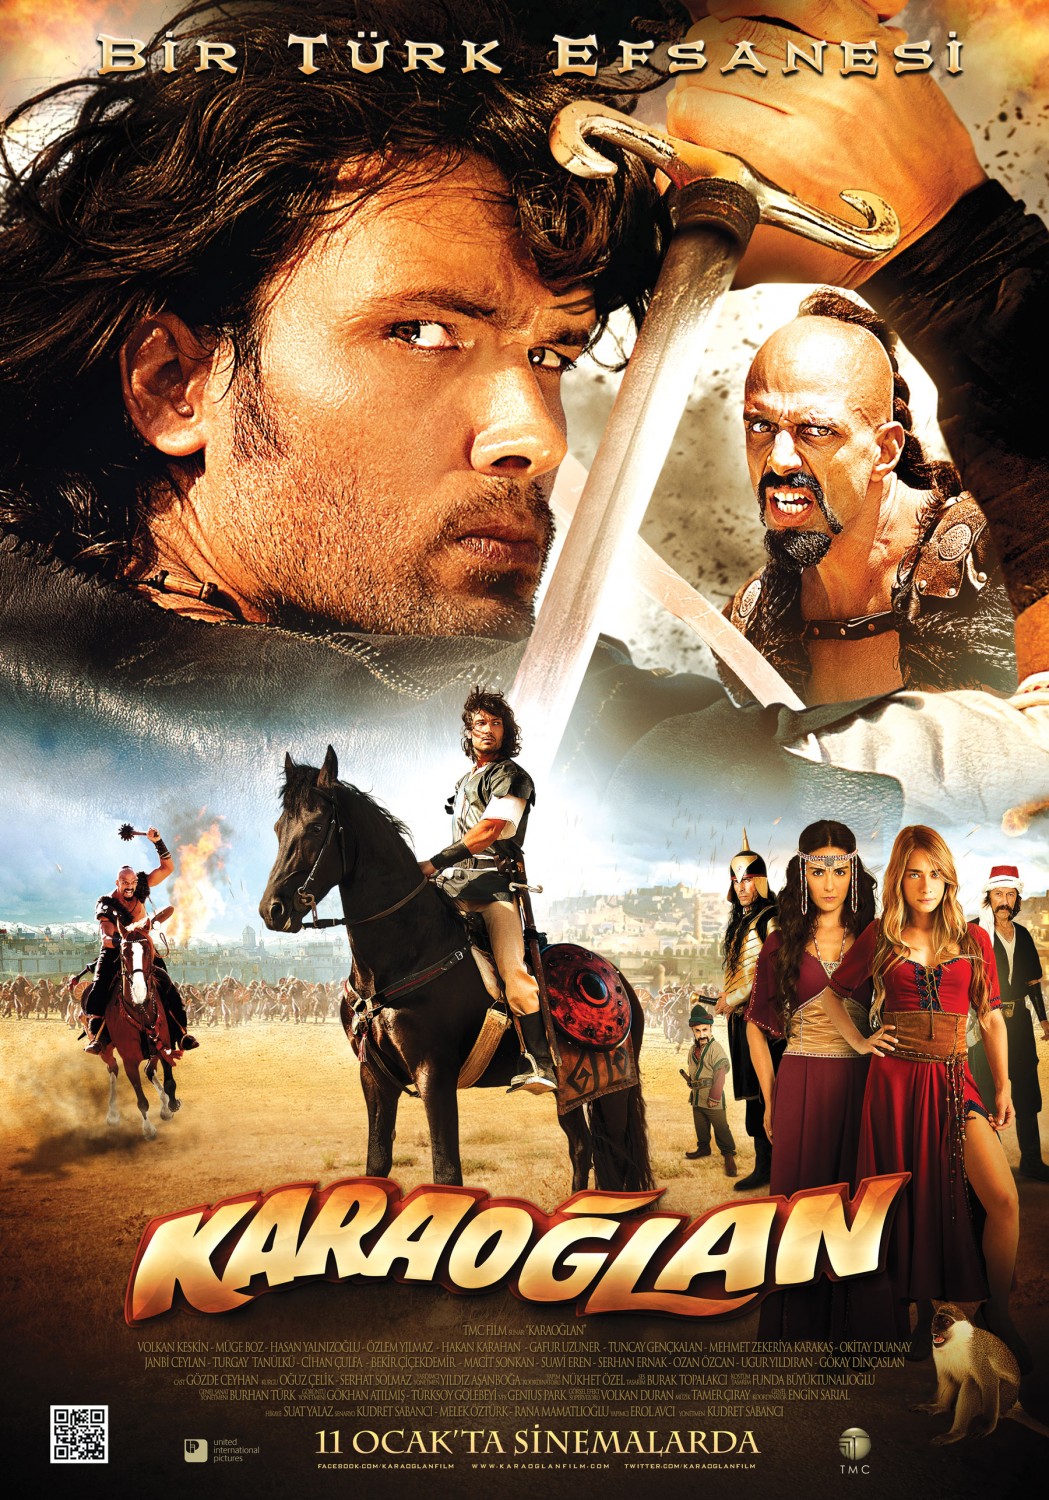 Extra Large Movie Poster Image for Karaoglan (#2 of 5)